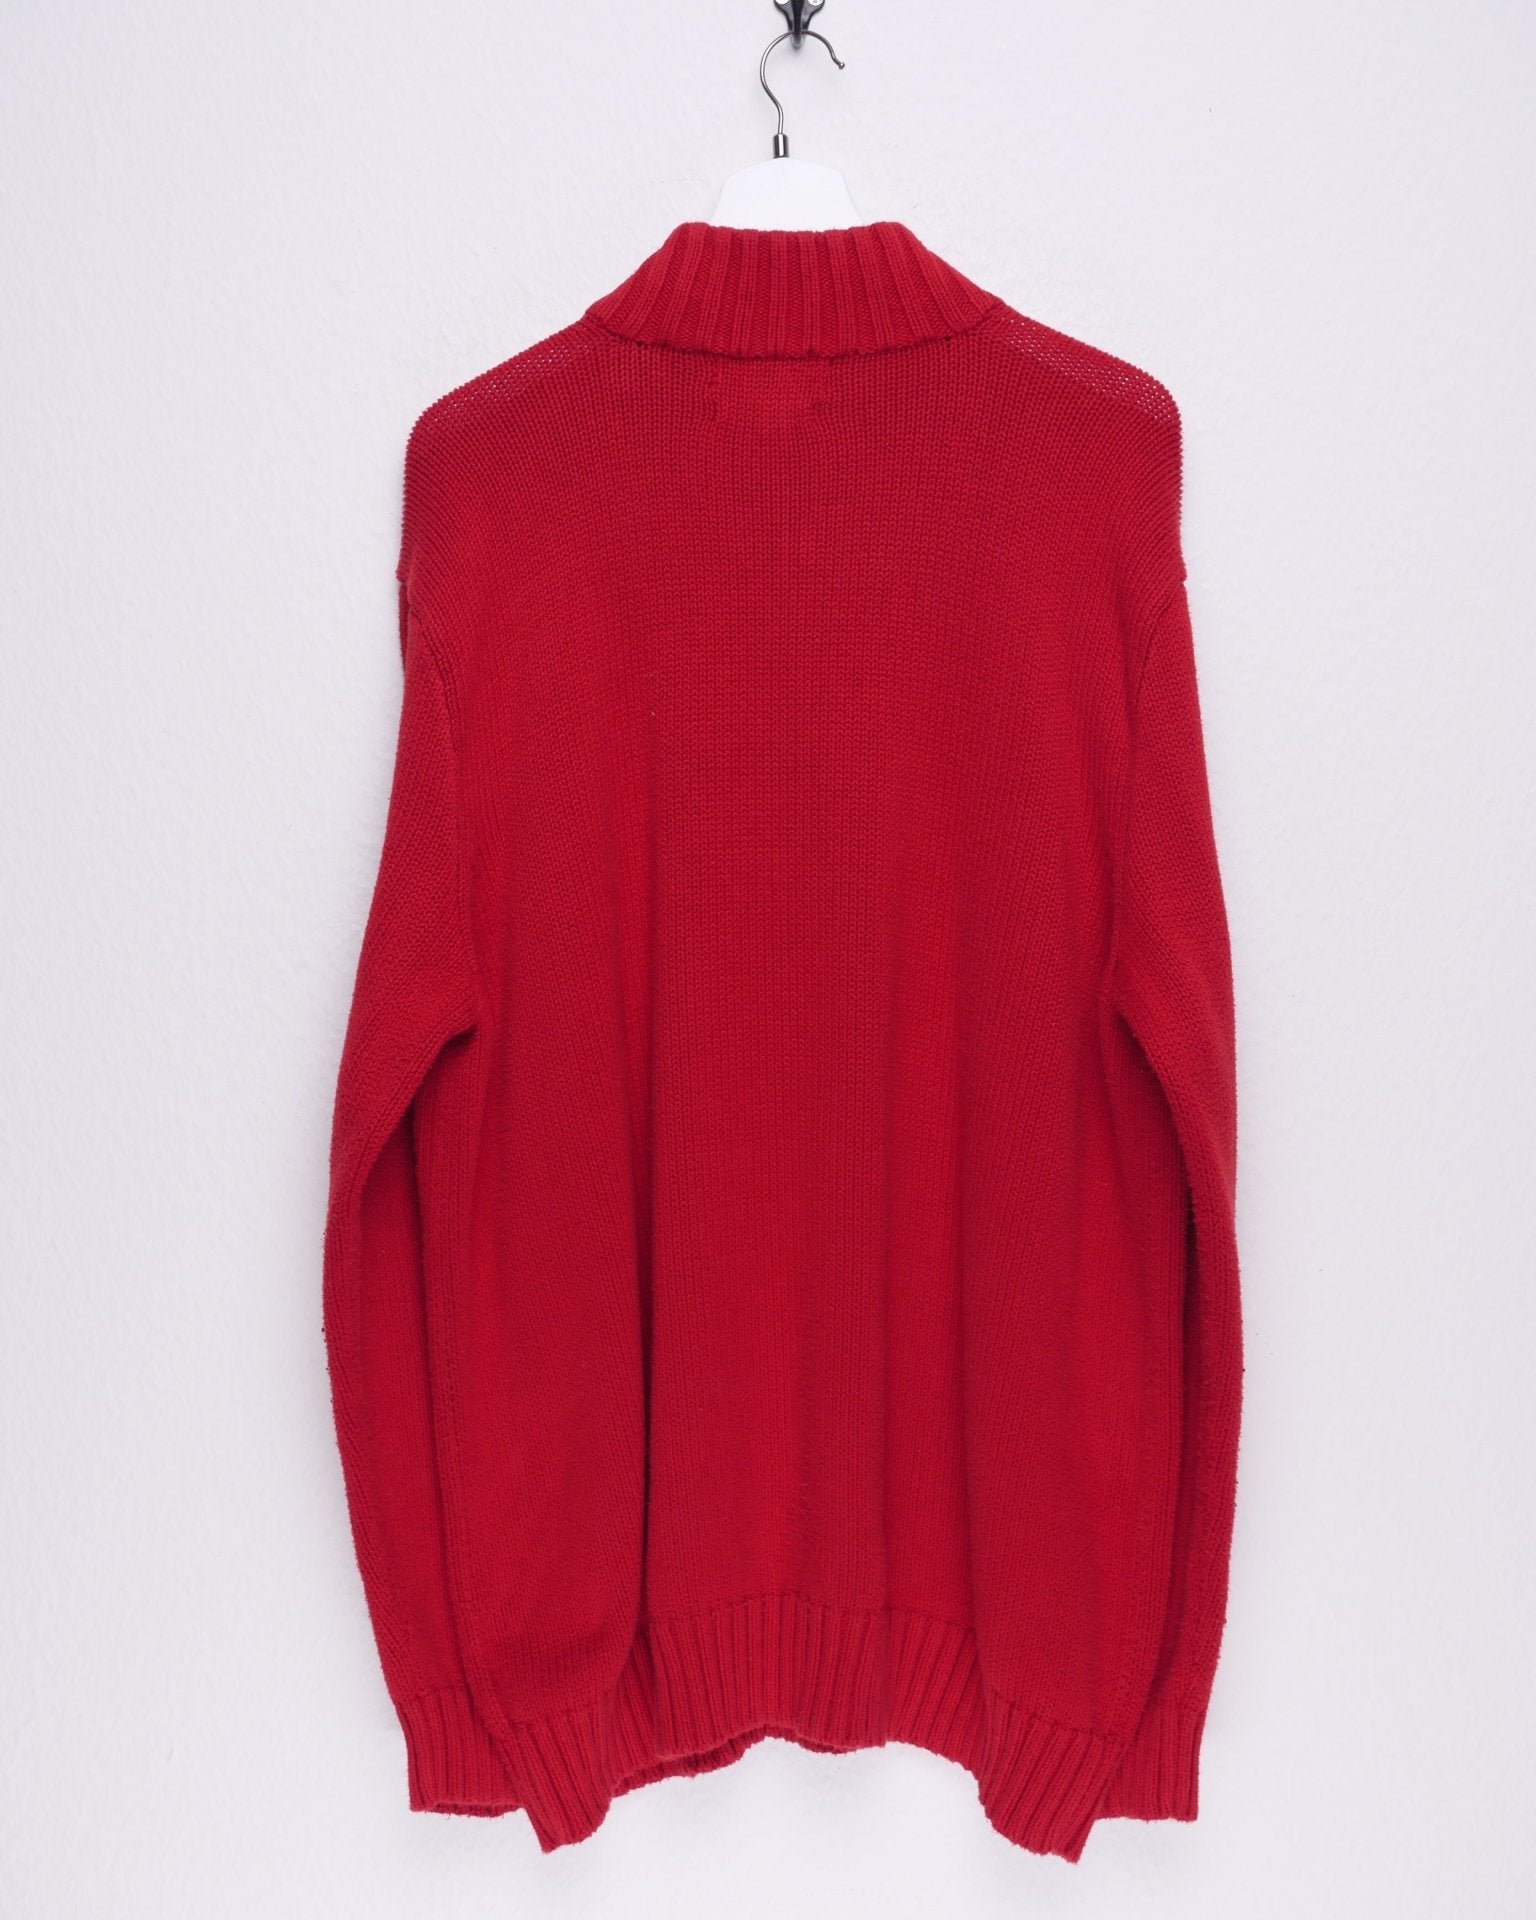 Polo Ralph Lauren embroidered Logo red Half Zip Sweater - Peeces